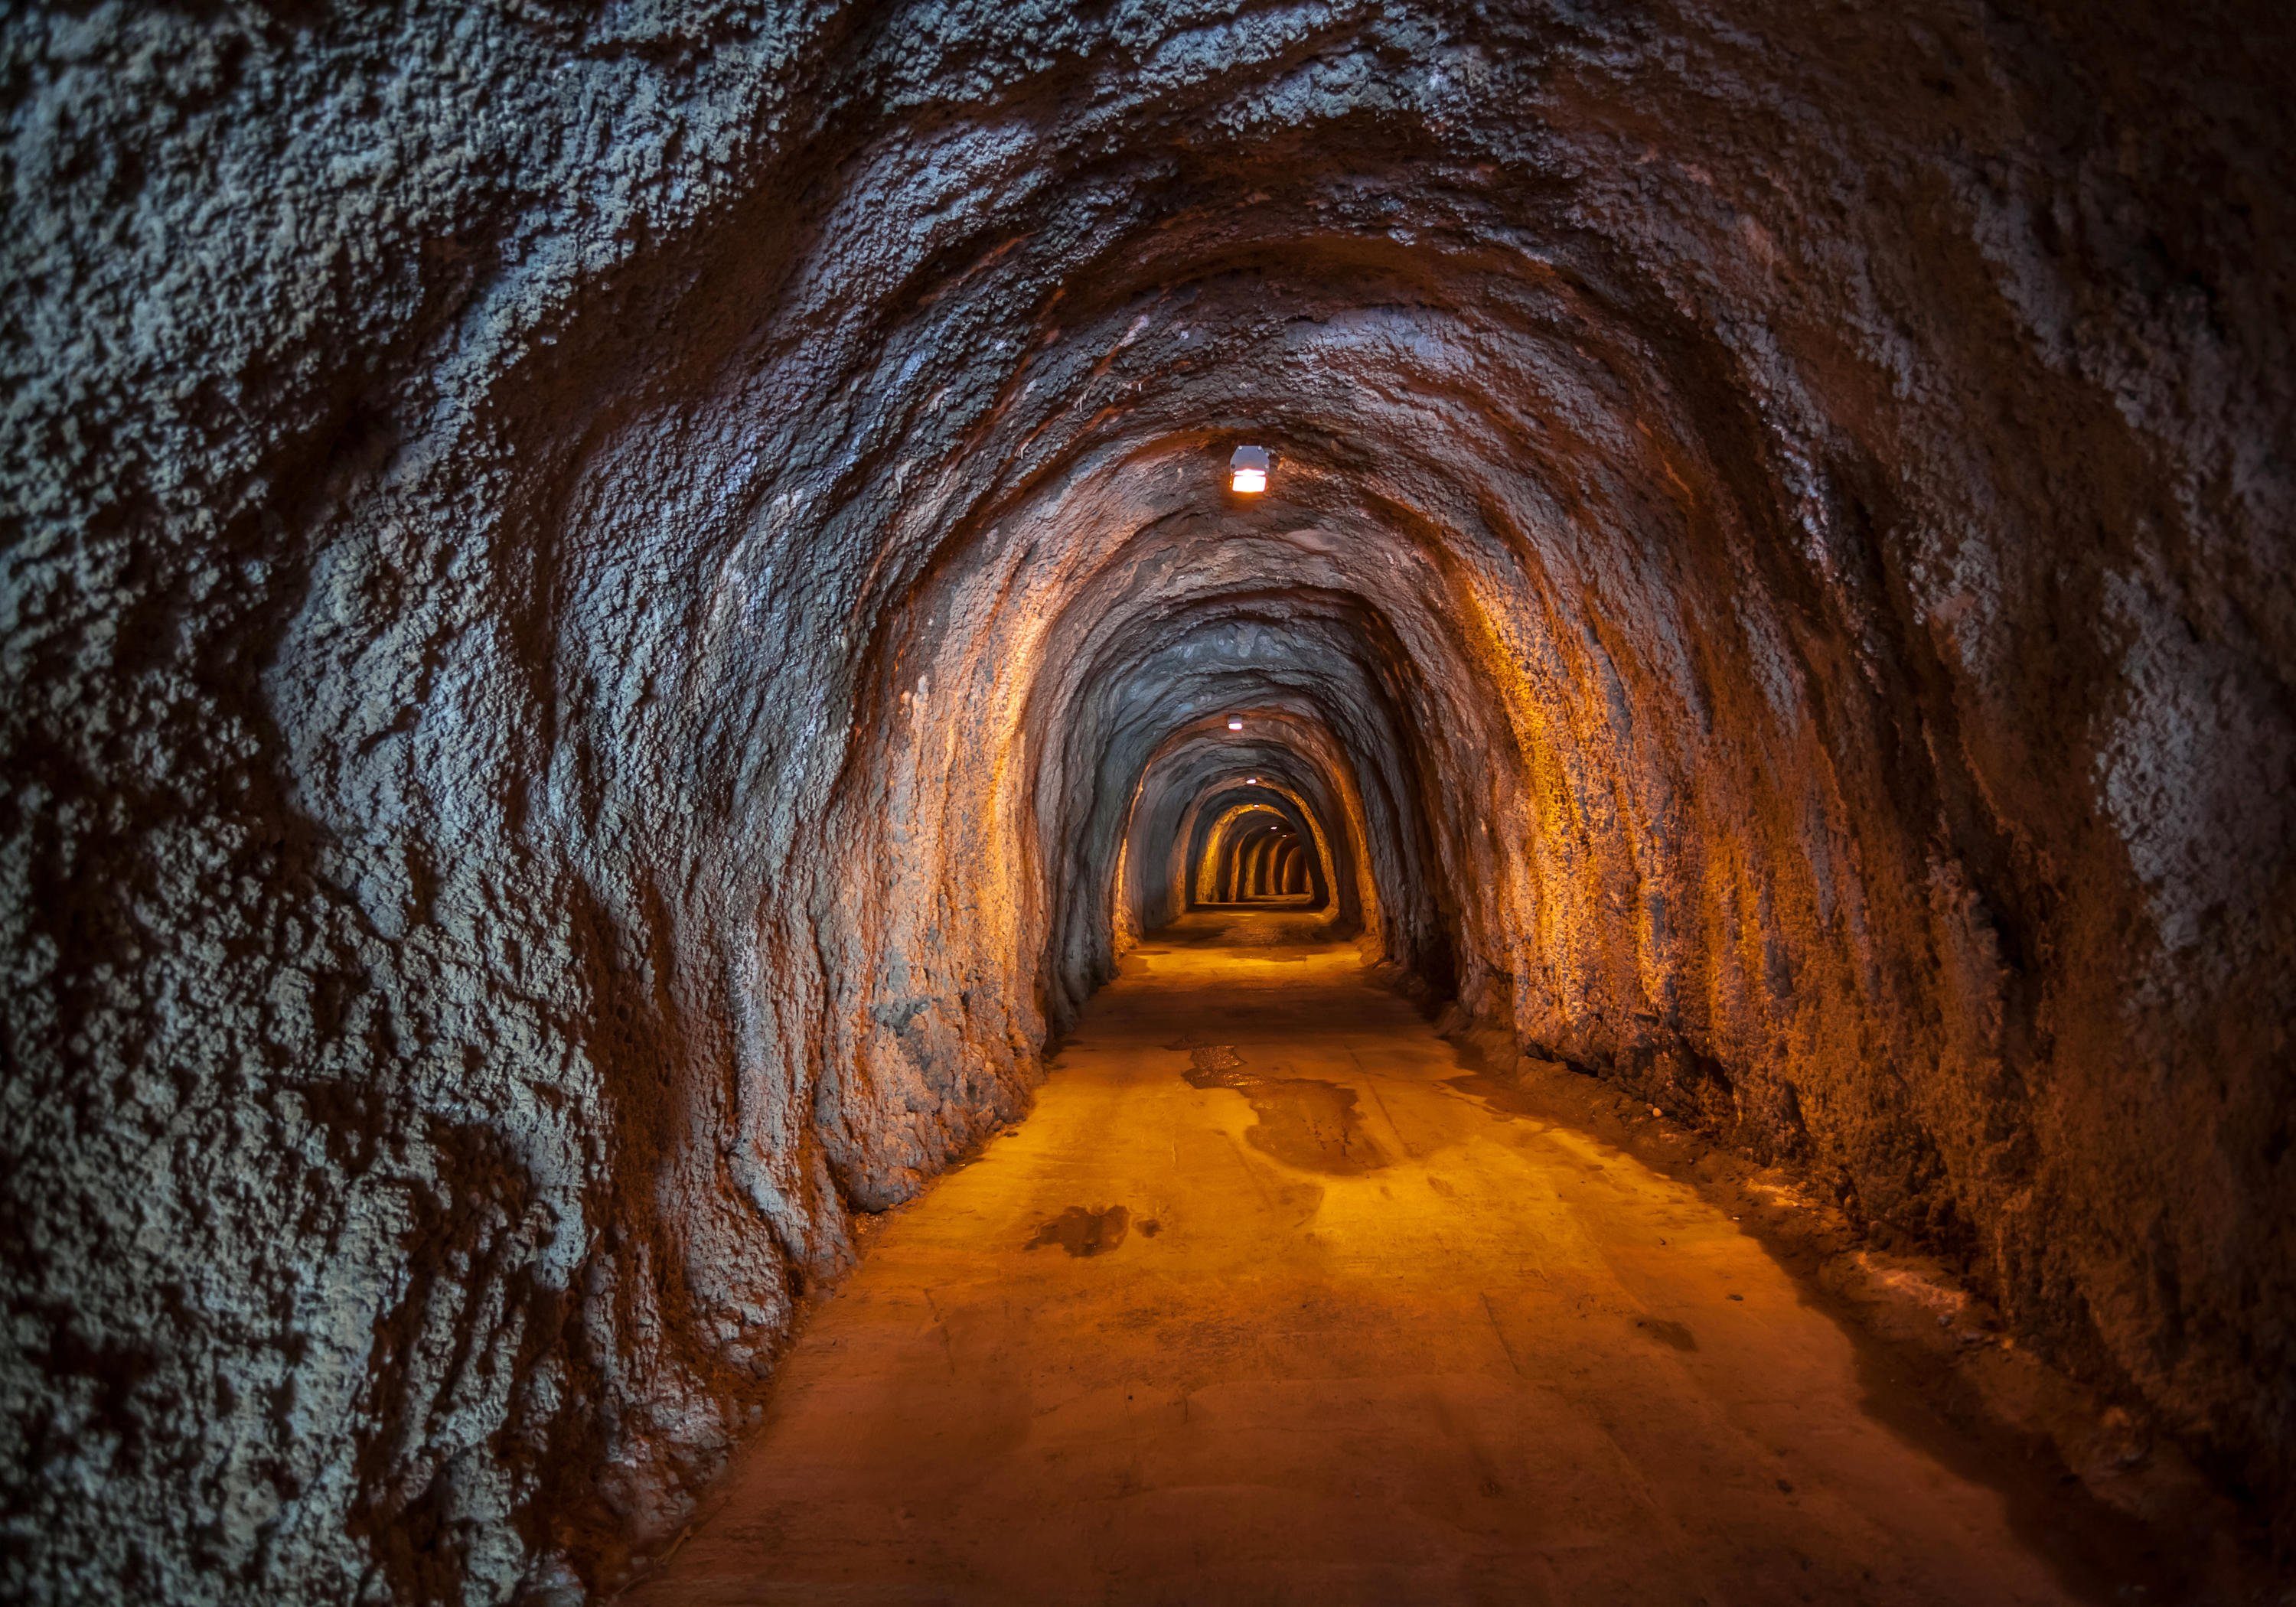 wandmotiv24 Fototapete unterirdischen Tunnel, glatt, Wandtapete, Motivtapete, matt, Vliestapete